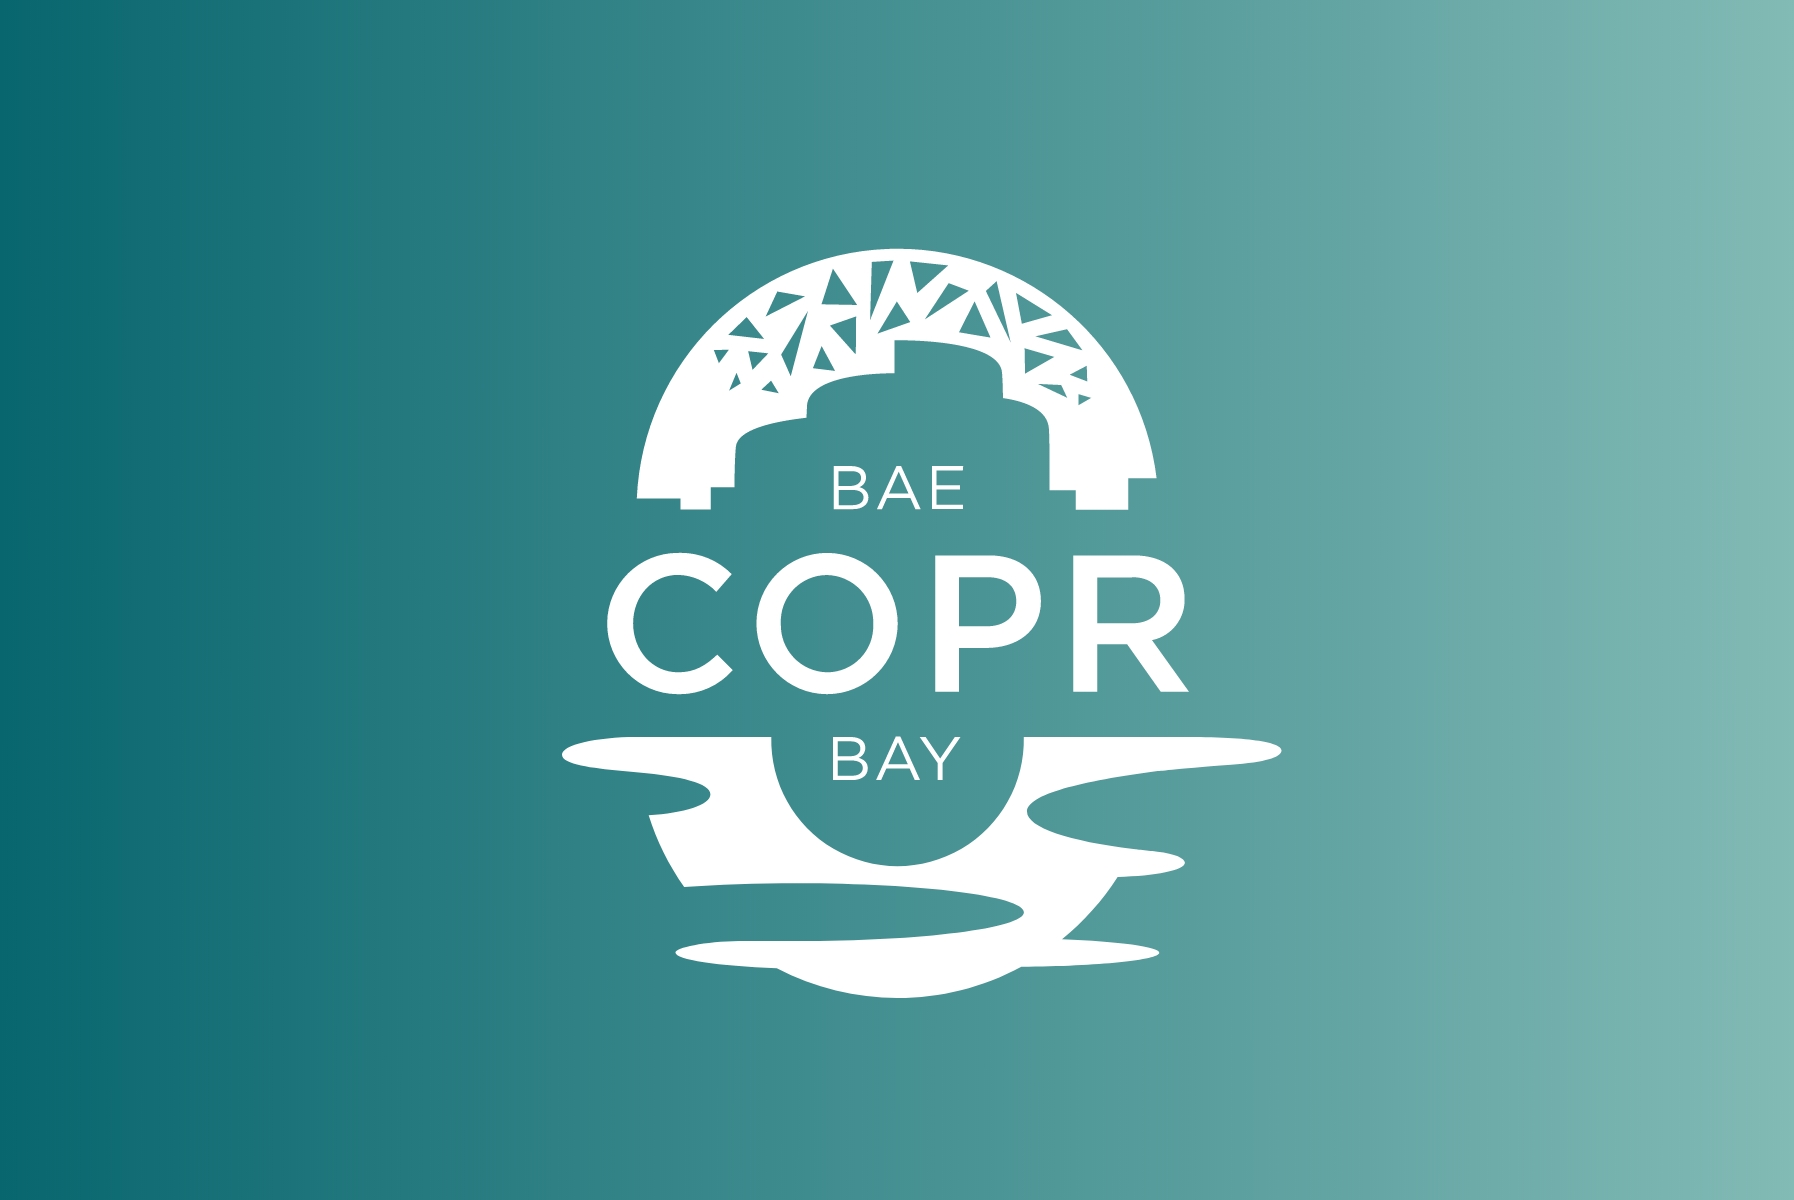 Copr Bay logo